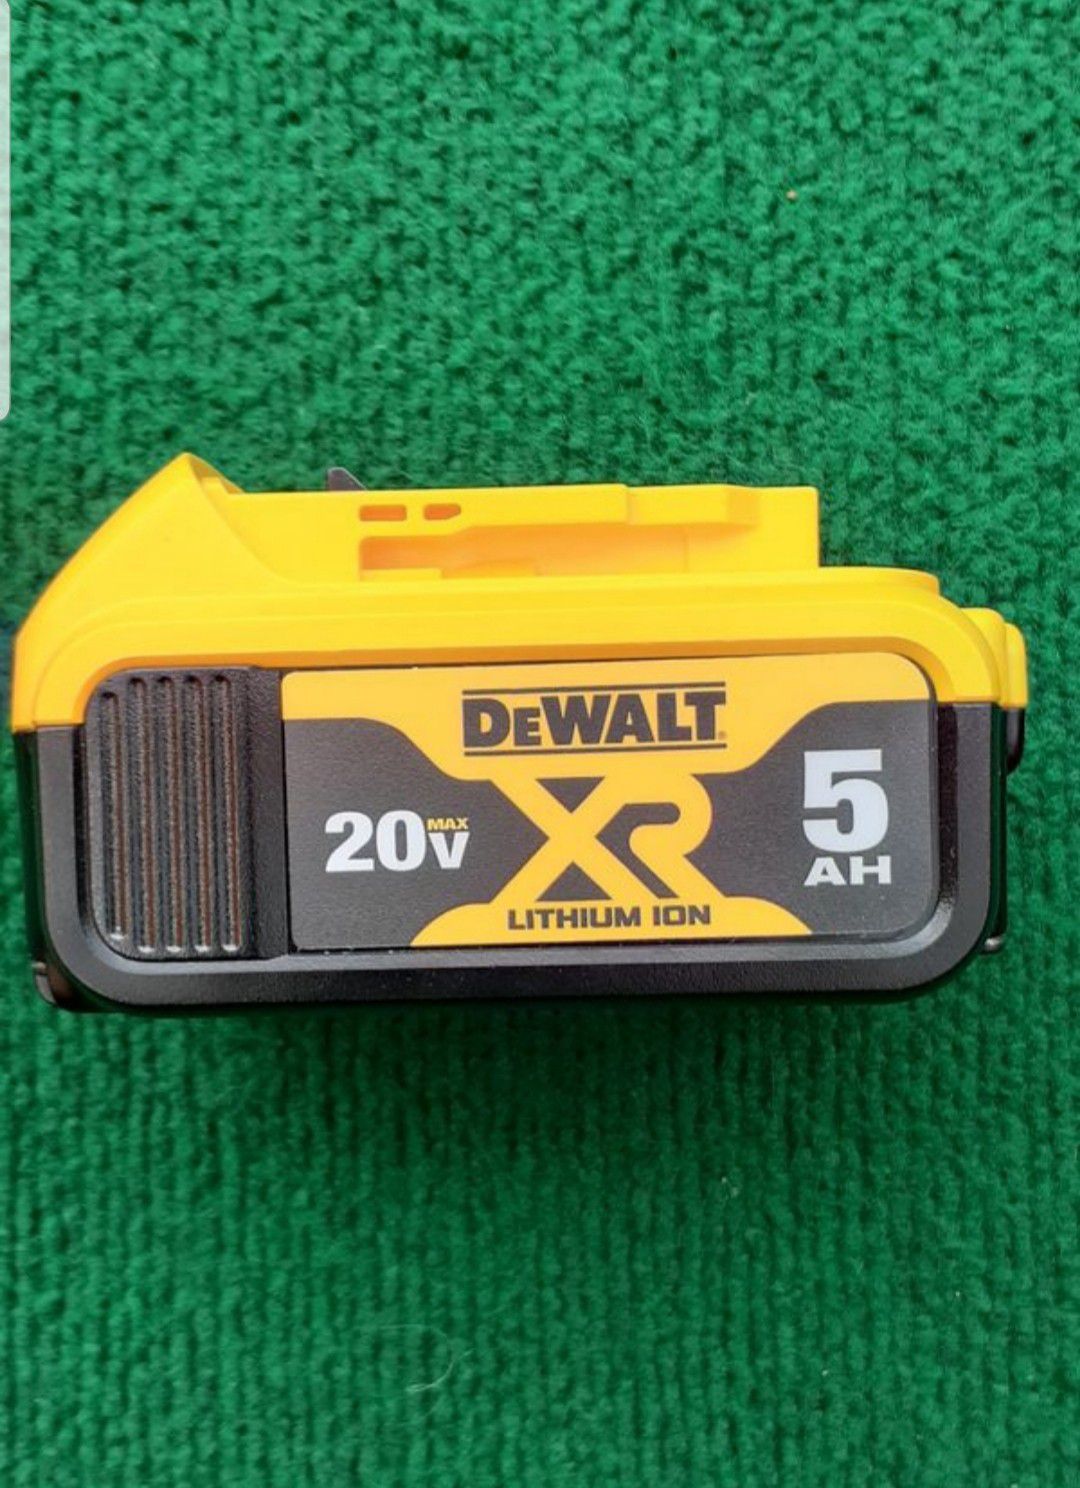 Dewalt 20 volt 5 amp battery price is firm Precio firme